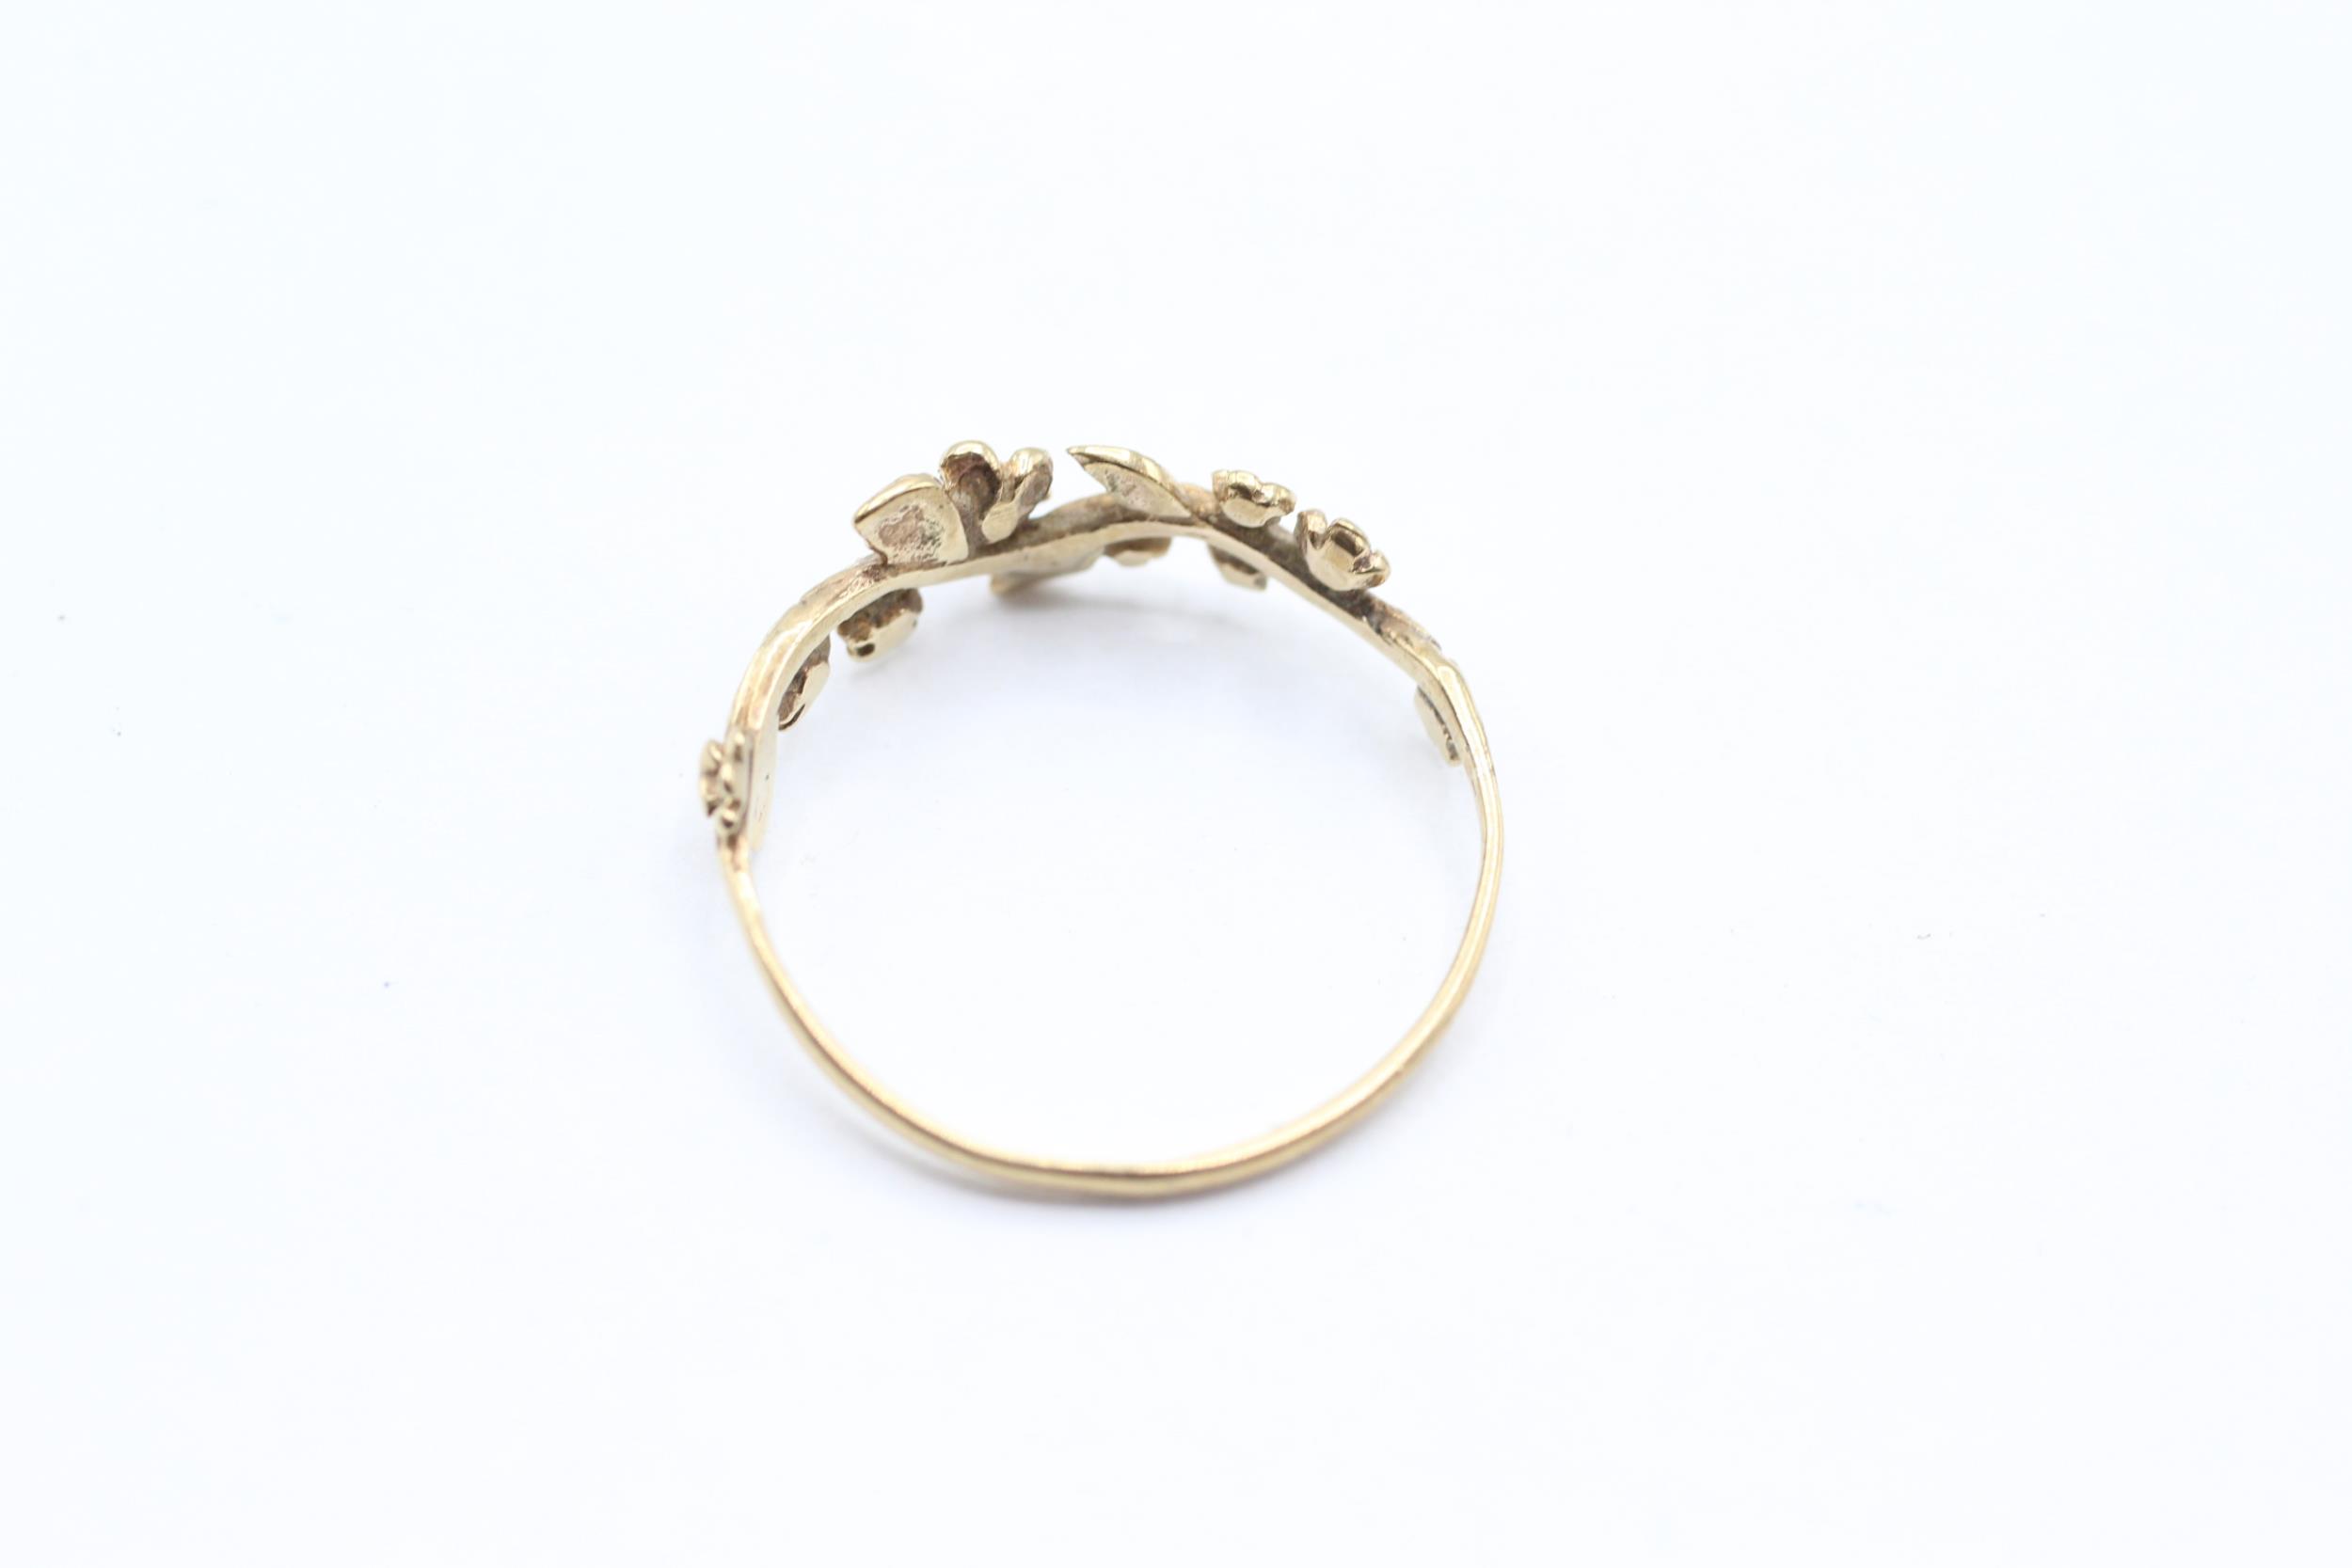 9ct gold vintage floral patterned ring Size O 1 g - Image 5 of 5